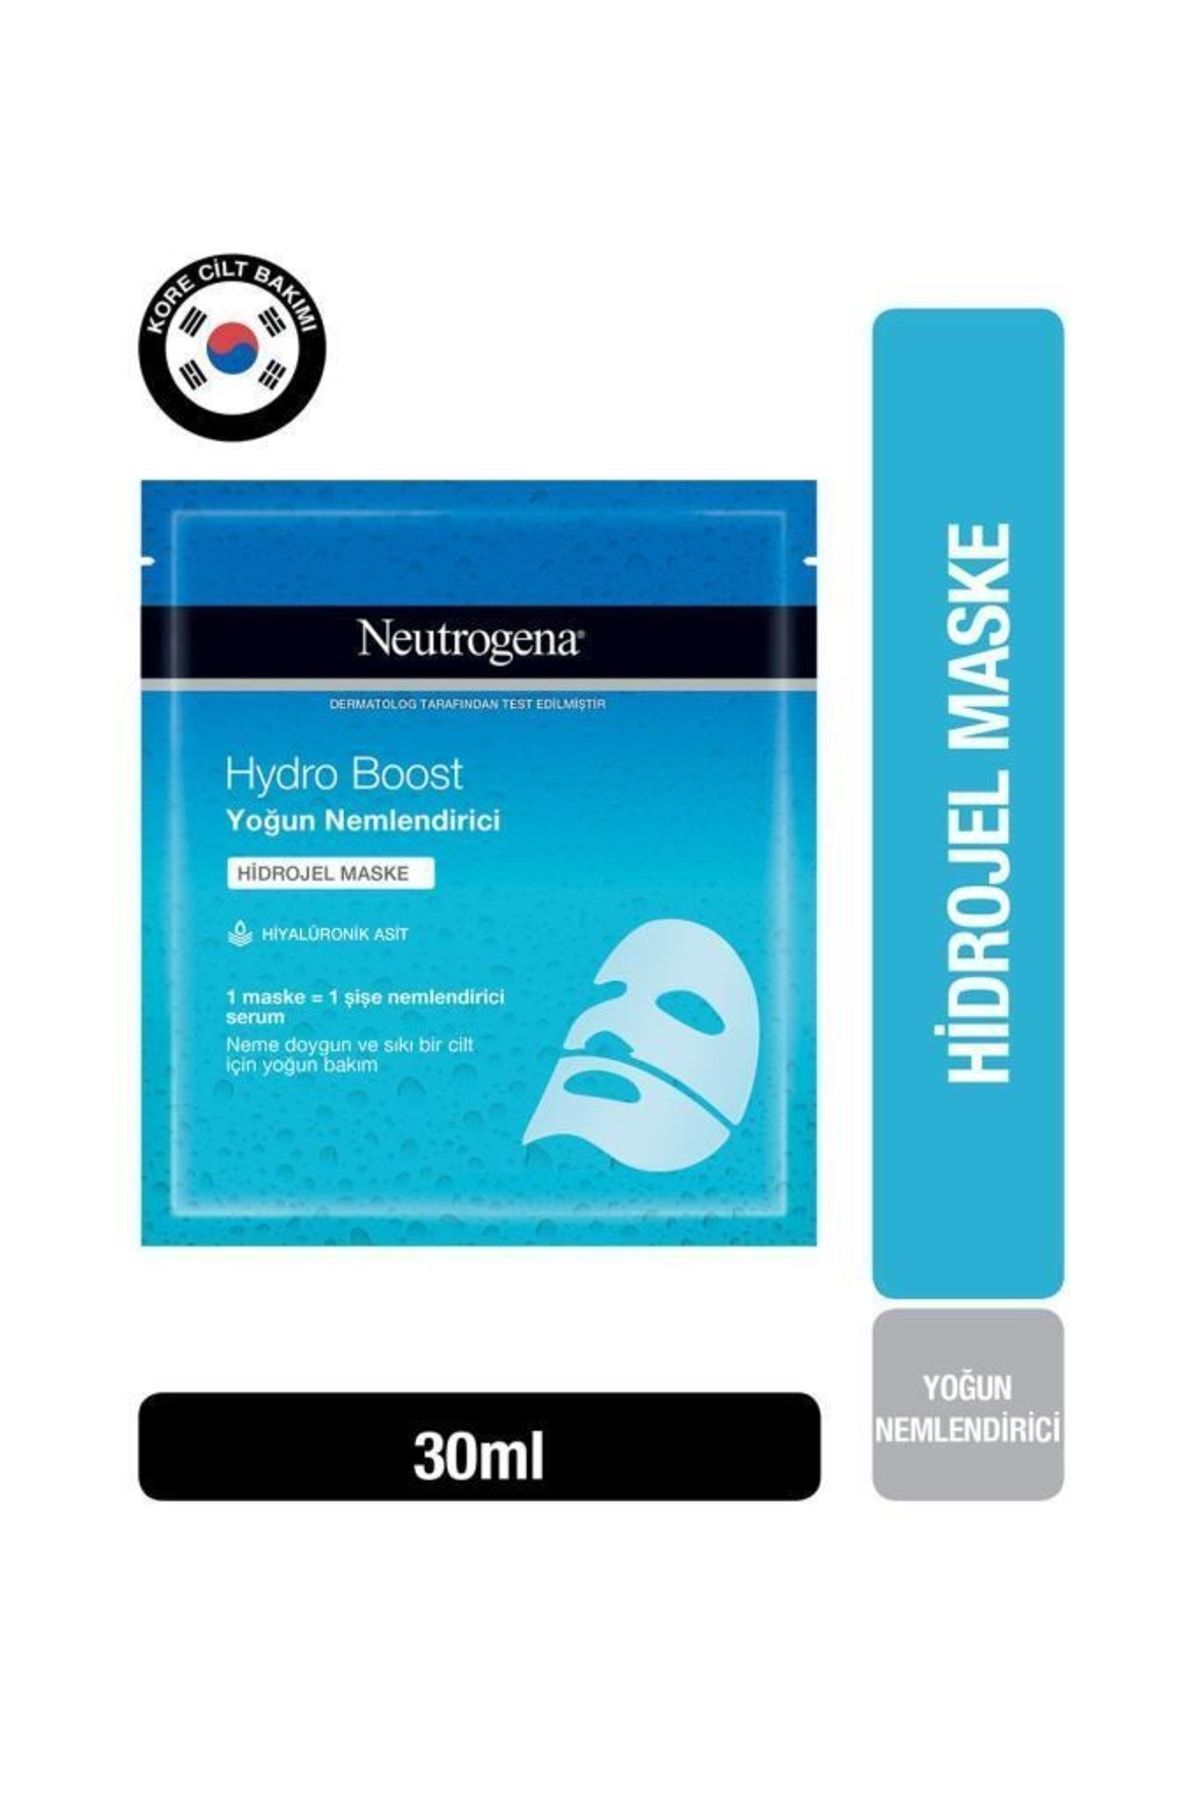 Neutrogena Hydro Boost Yoğun Nemlendirici Hidrojel Maske 30ml